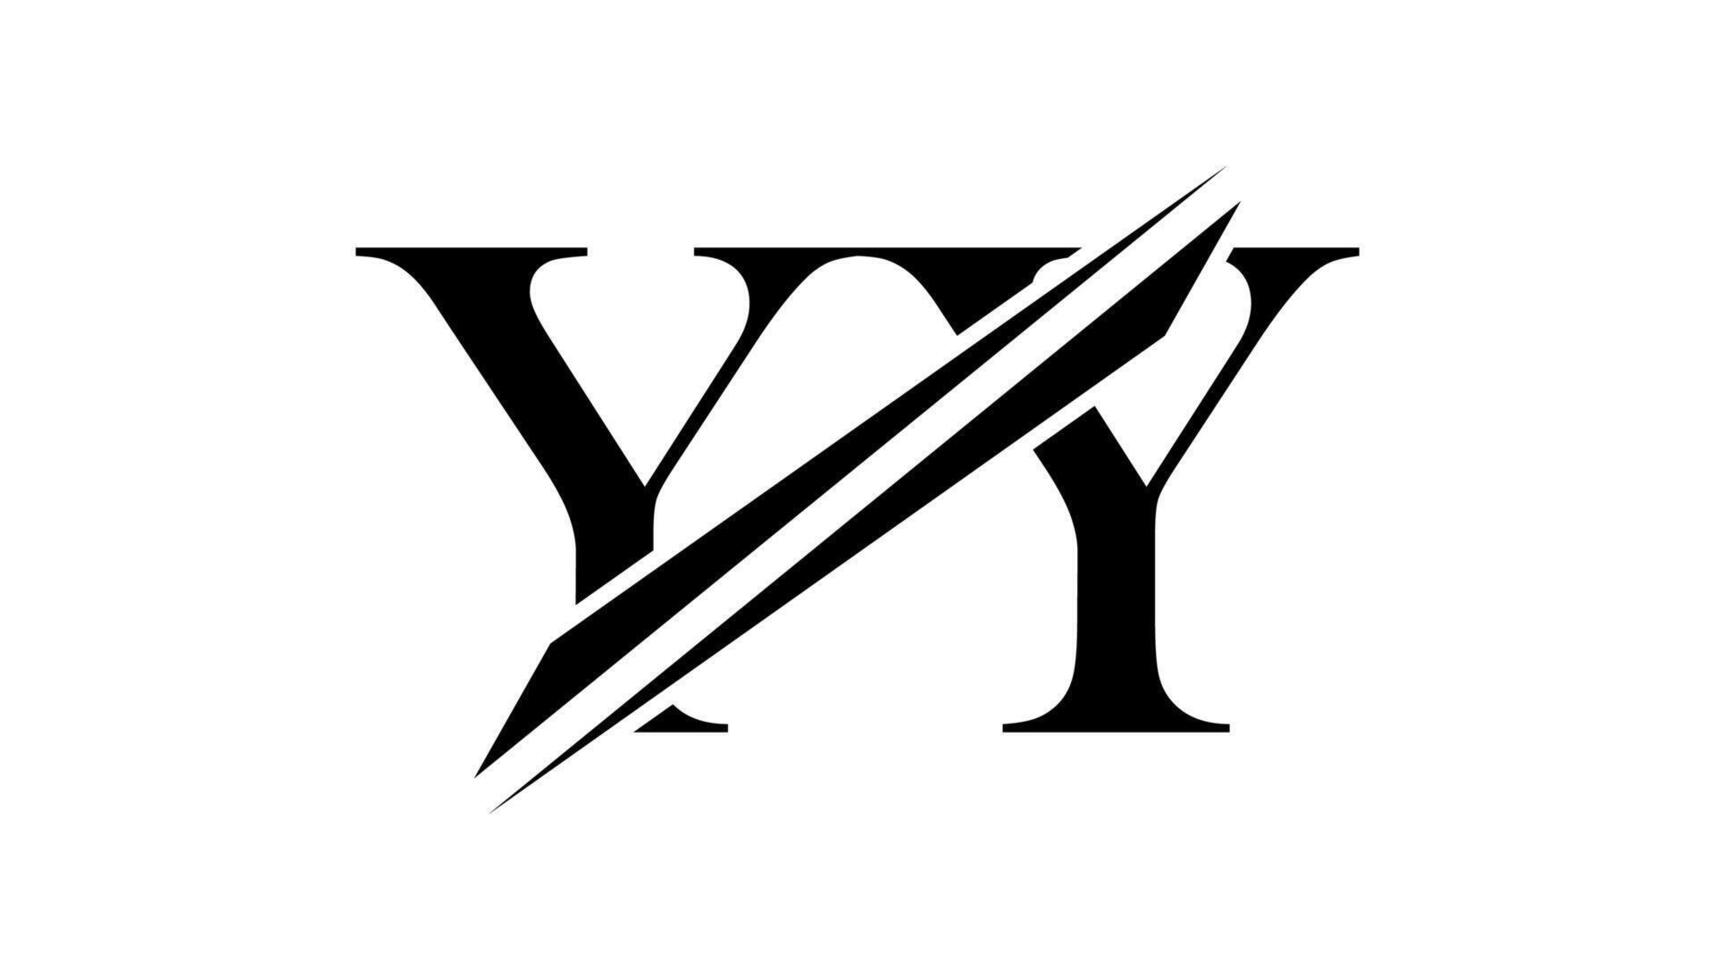 yy letter logo design template elements. yy letter logo design. vector